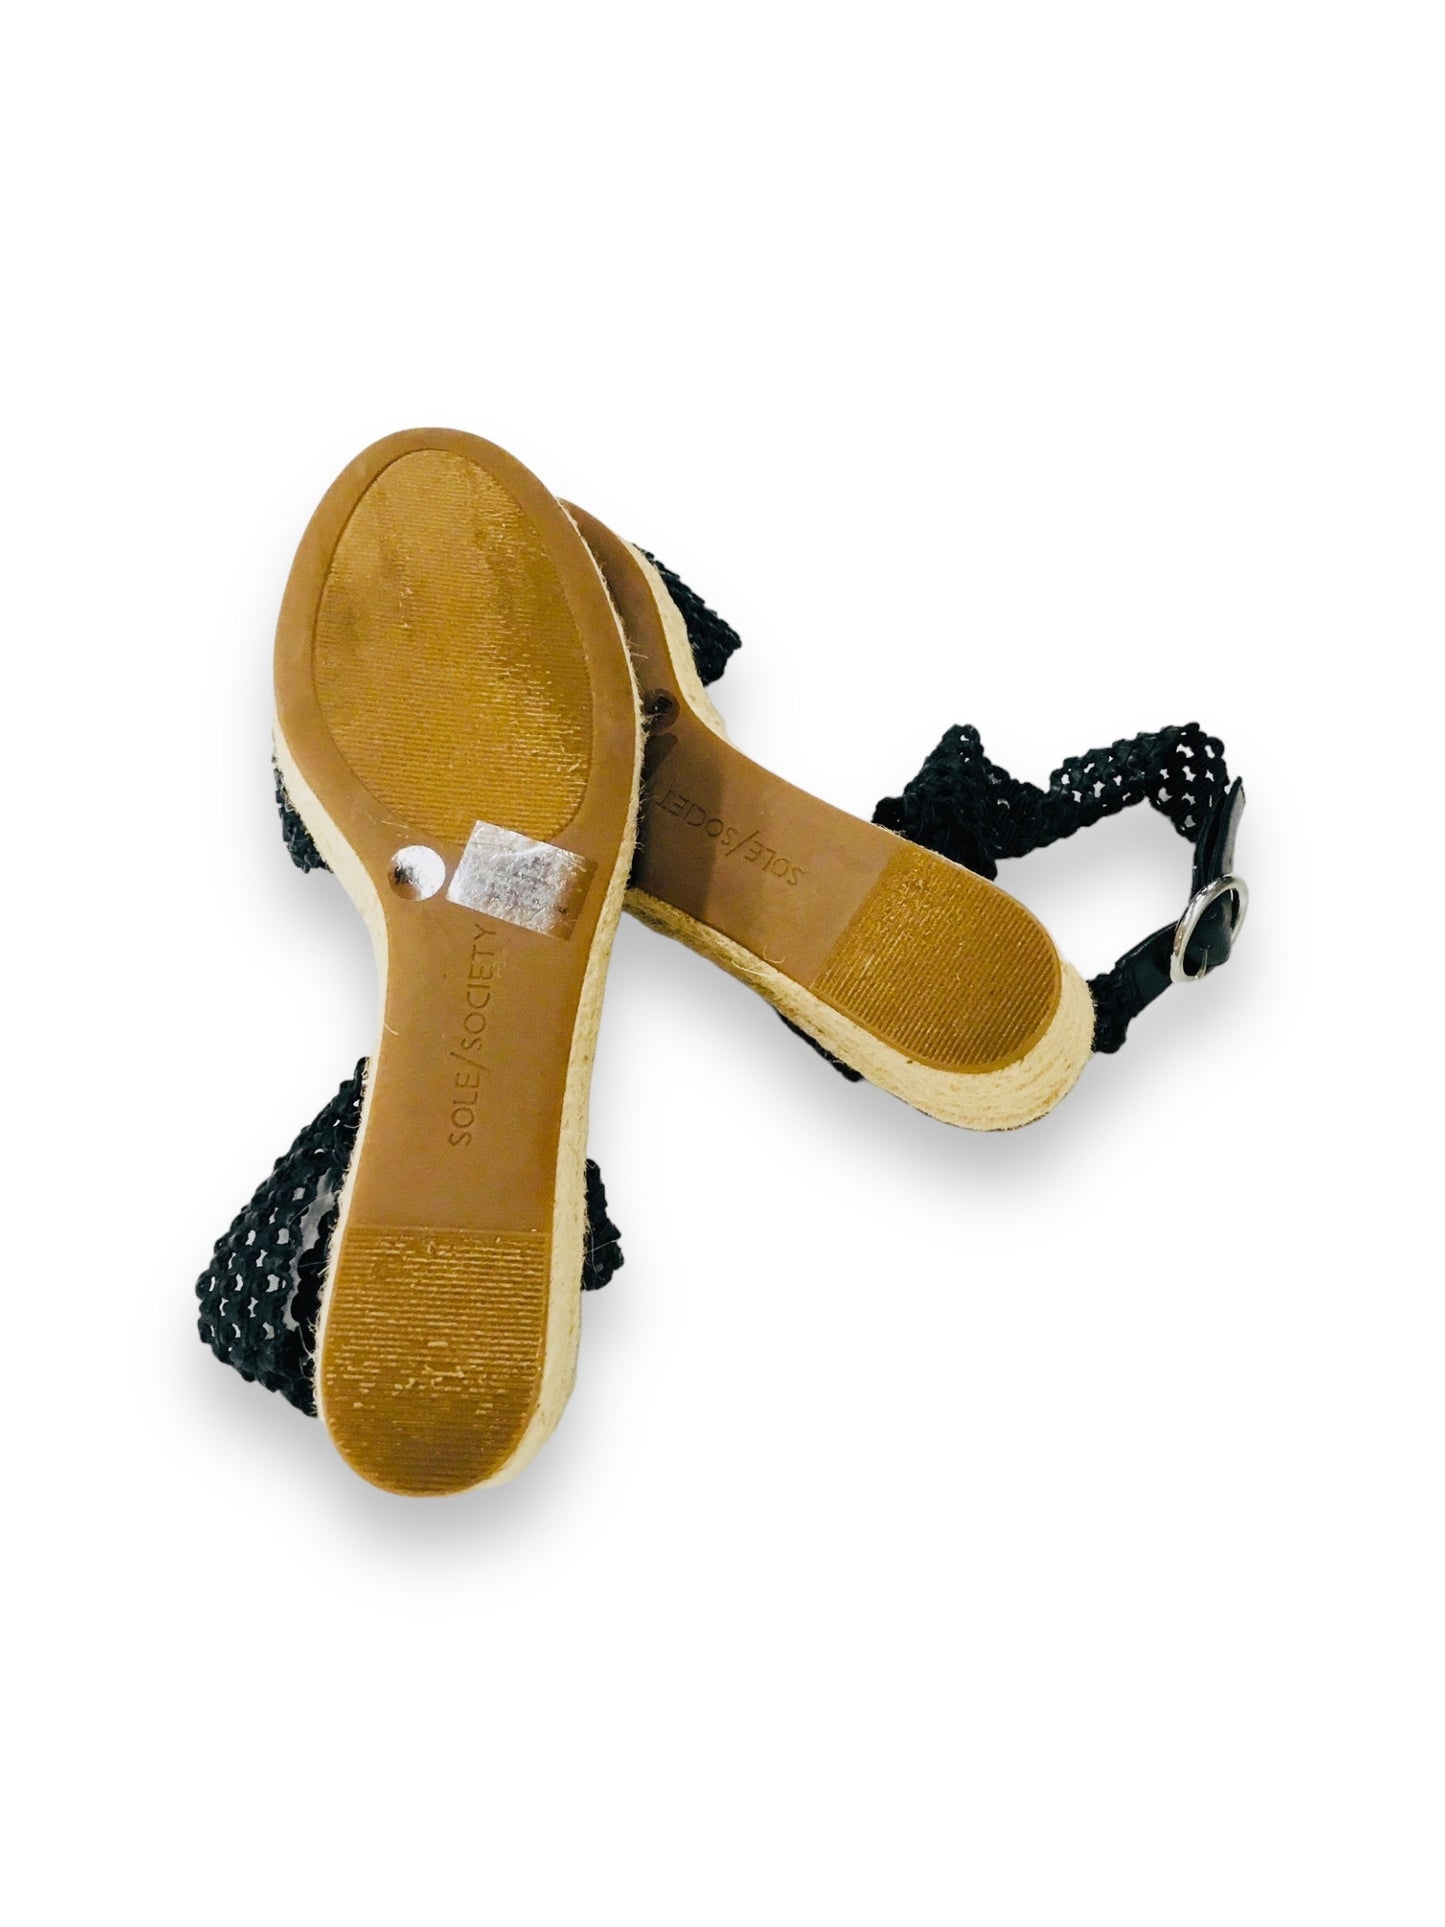 Black Sandals Heels Block Sole Society, Size 9.5